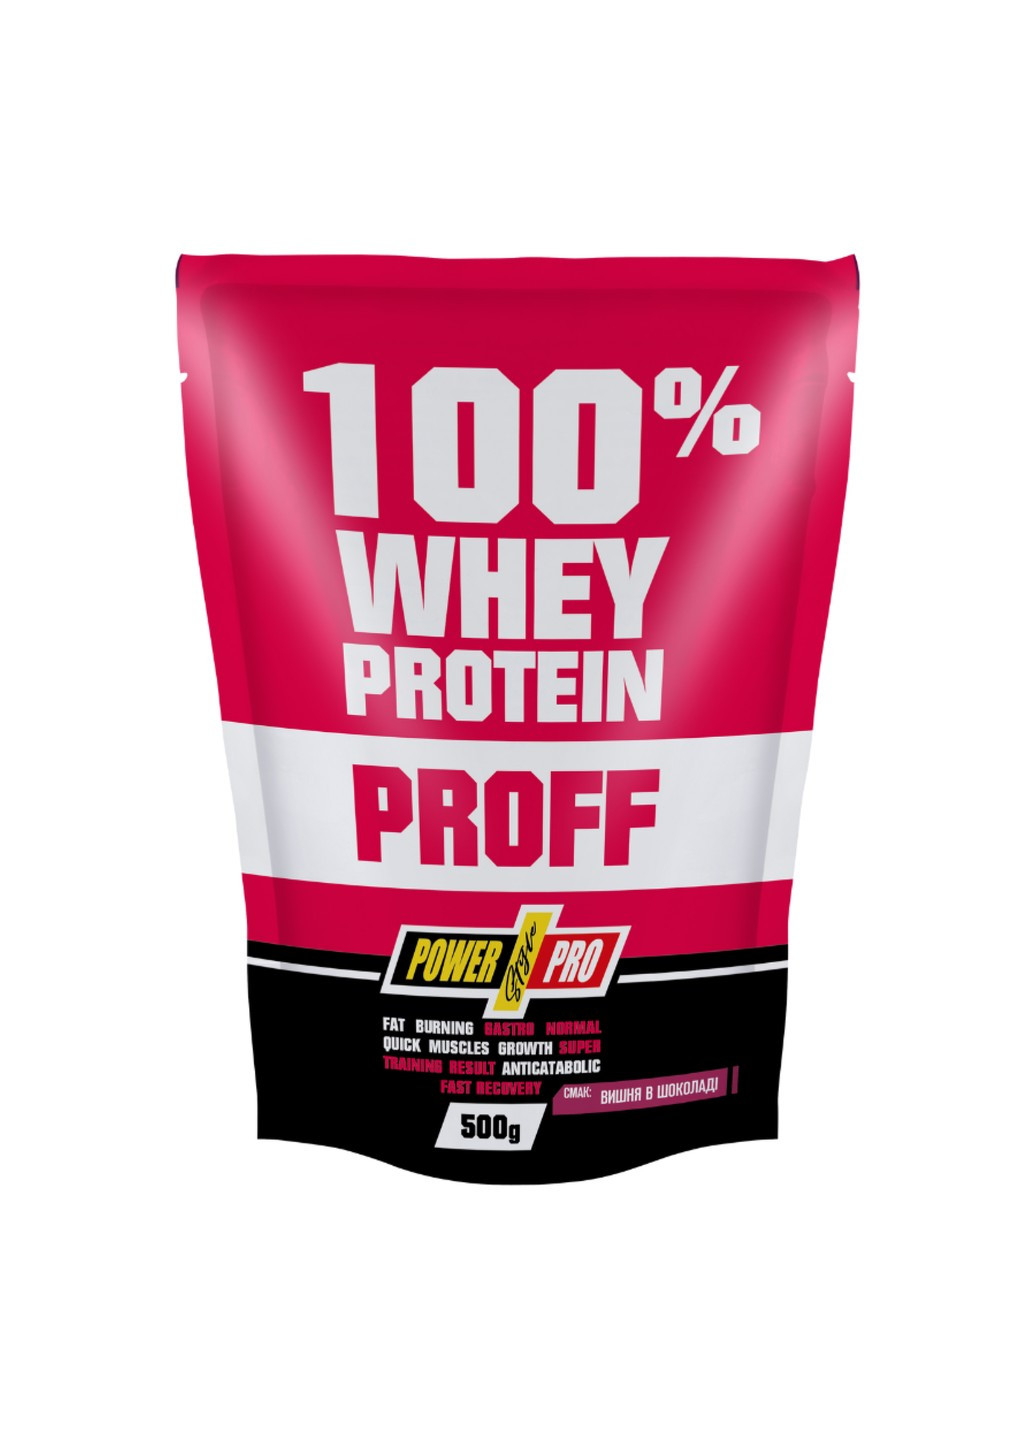 100% Whey Protein Proff - 500g Chocolate Cherry Power Pro (270937386)